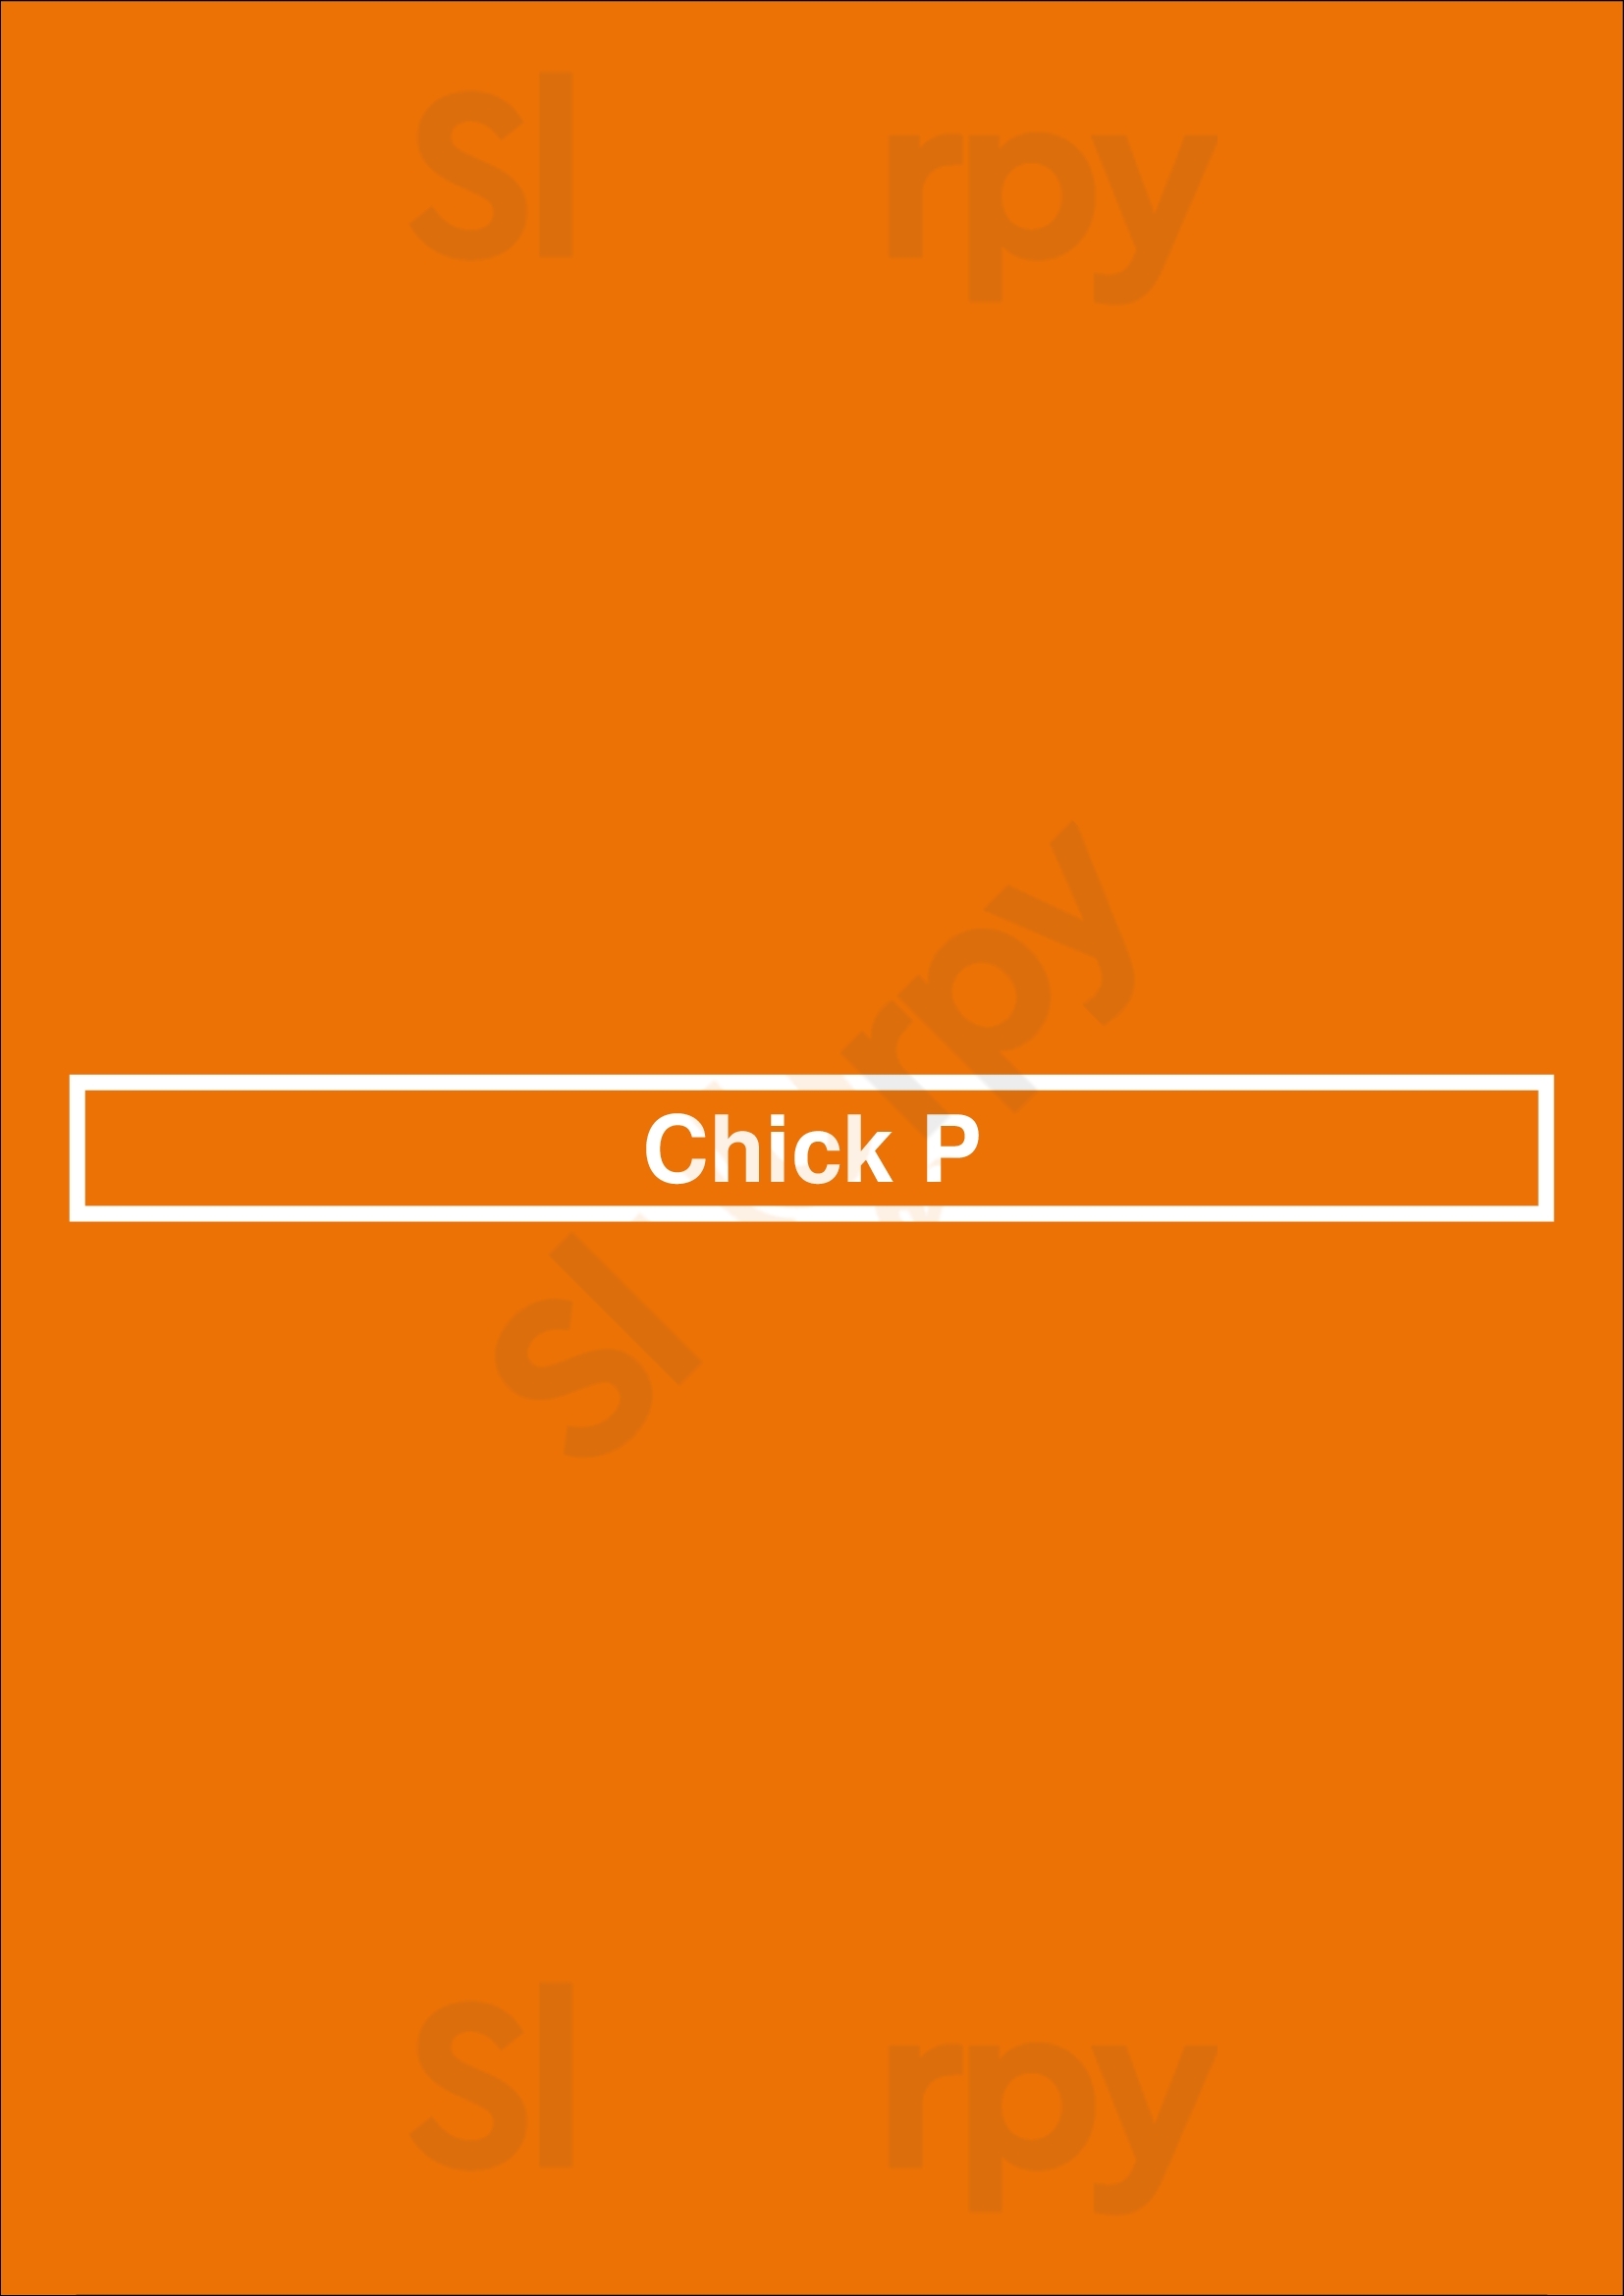 Chick P Brooklyn Menu - 1